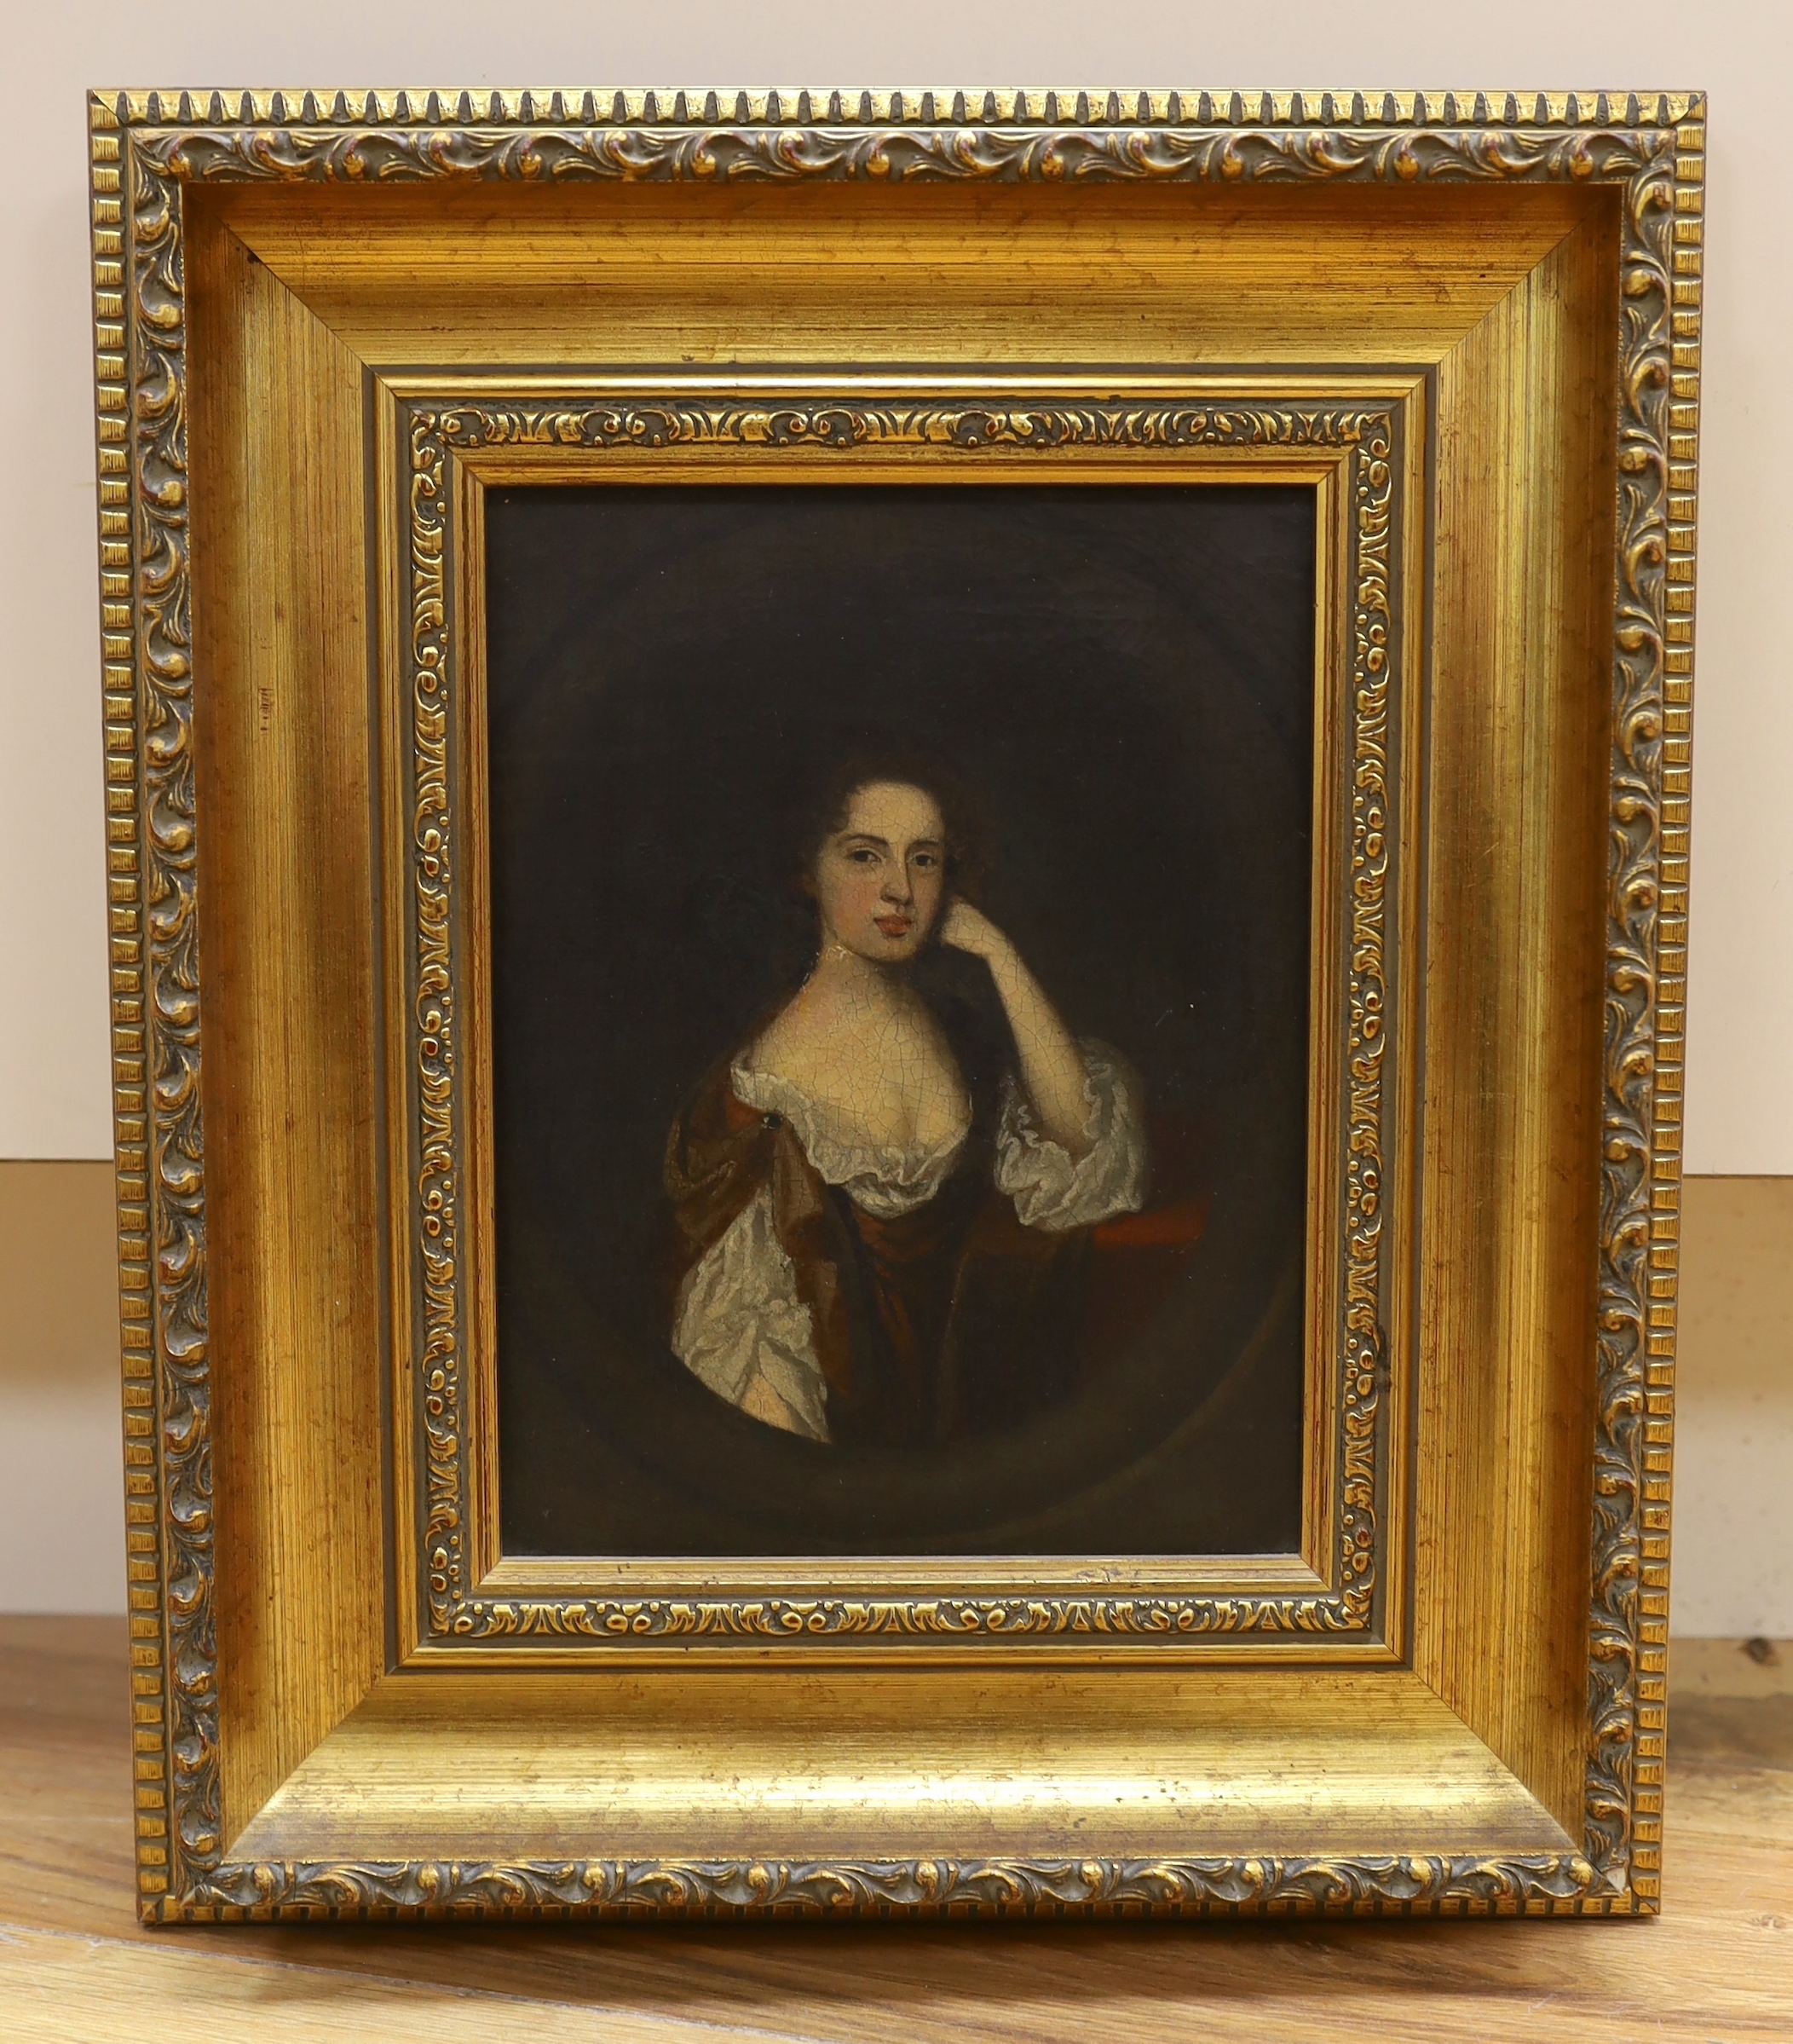 19th century English School, oil on canvas, Portrait of a lady wearing 17th century dress, feined oval, 21 x 16cm